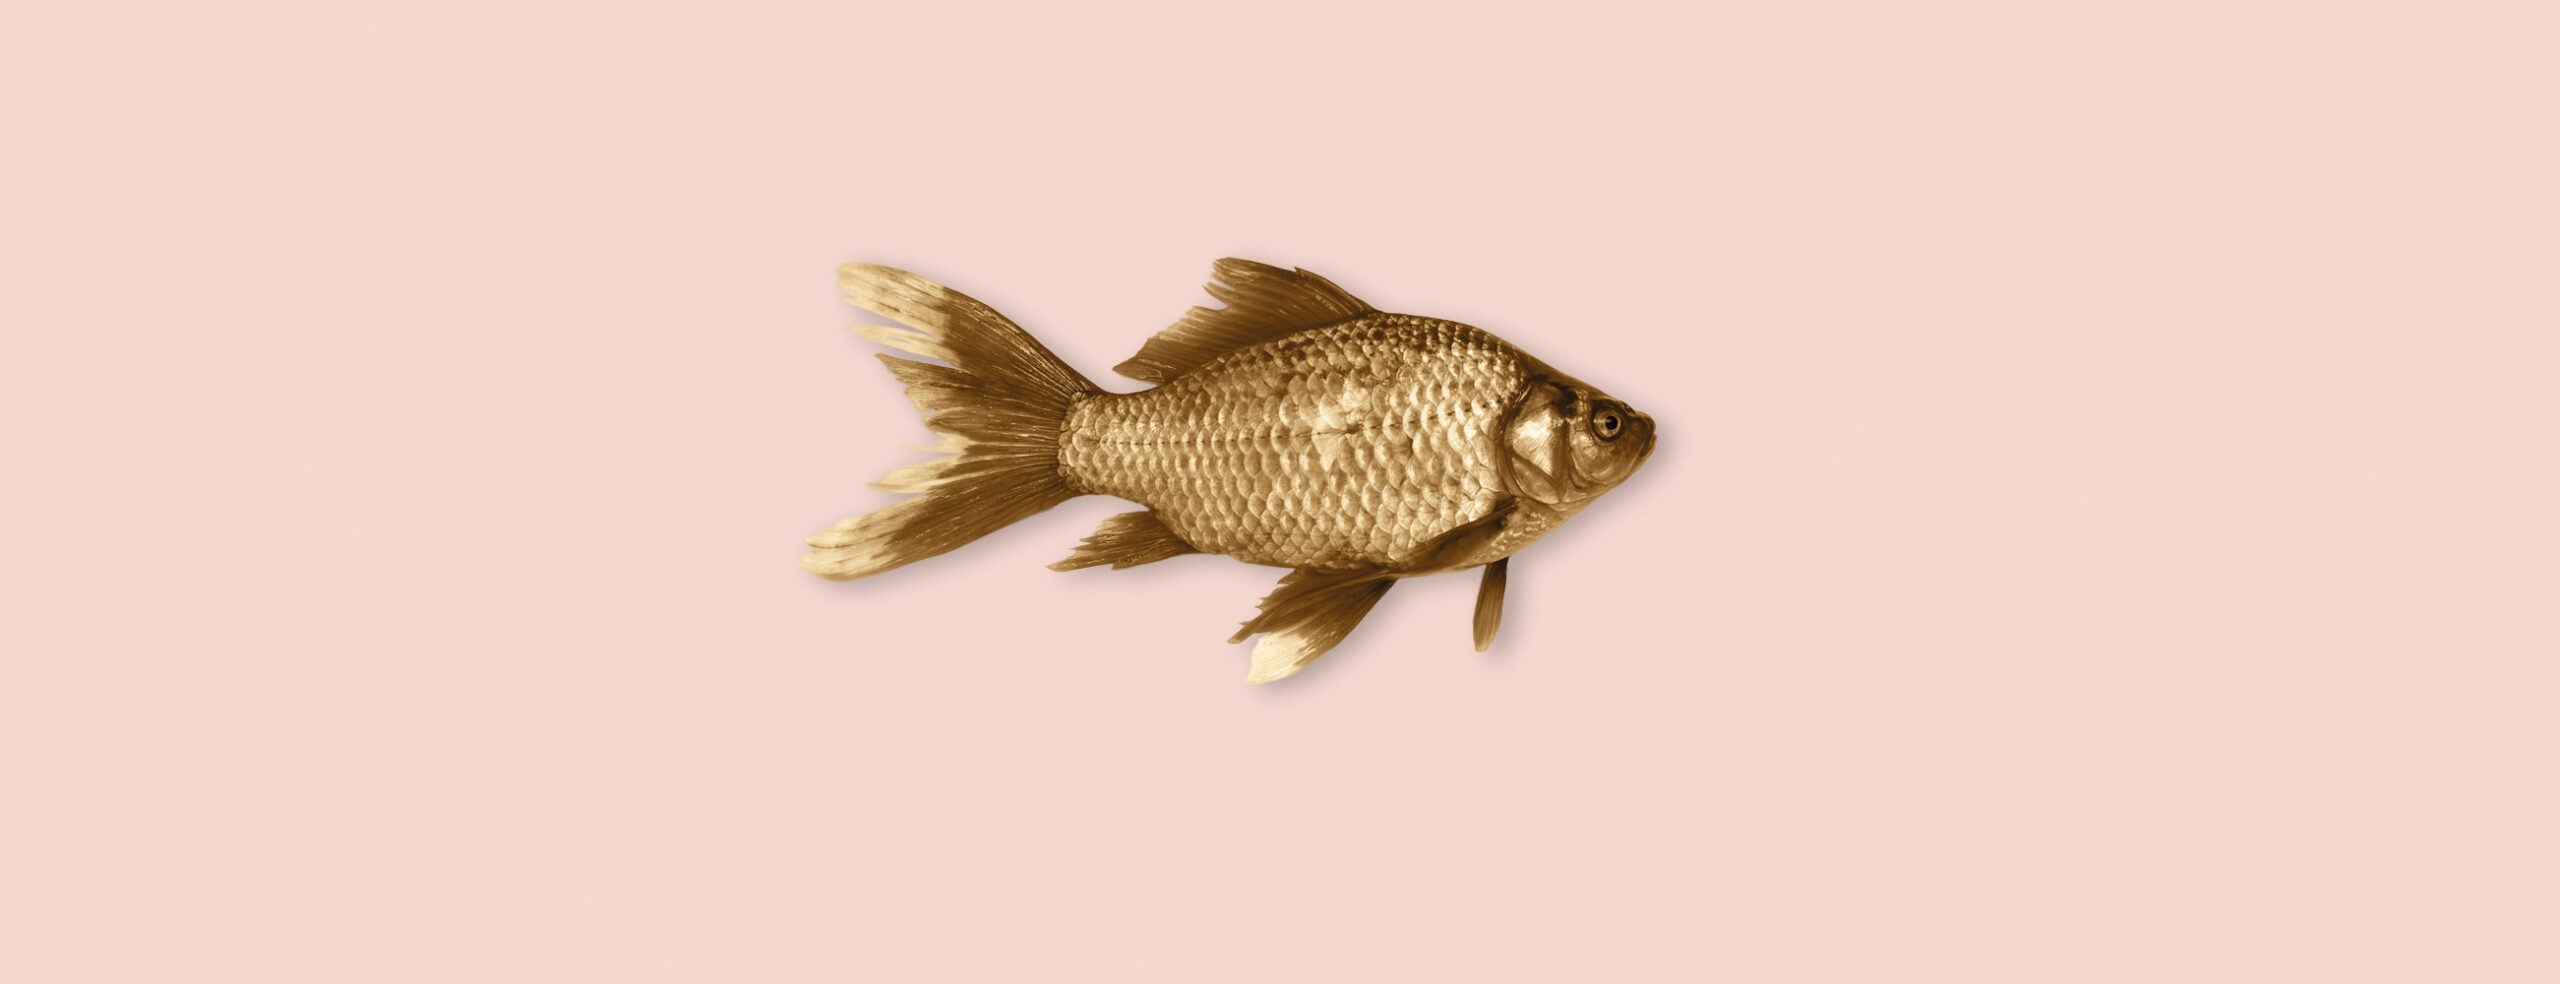 golden fish on rose background